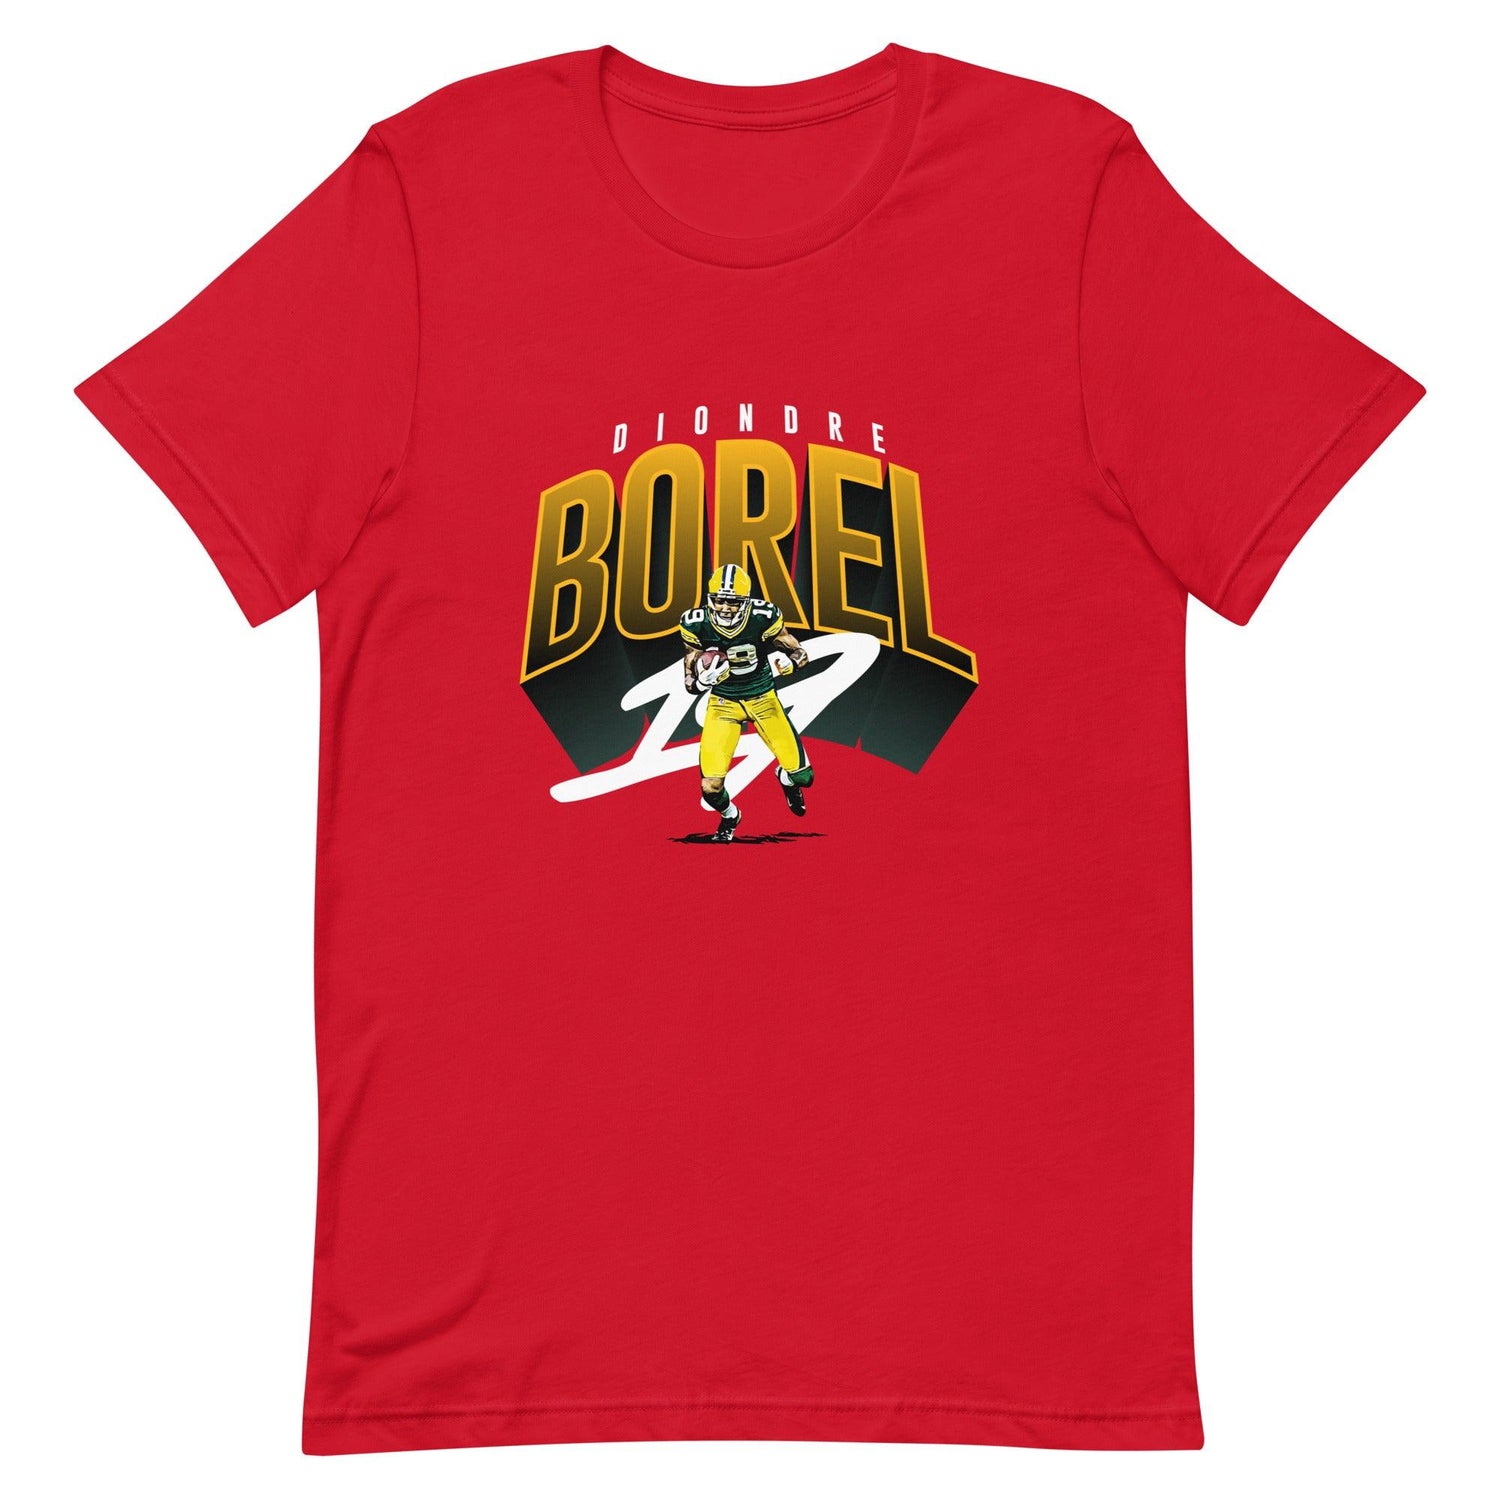 Diondre Borel "Gameday" t-shirt - Fan Arch